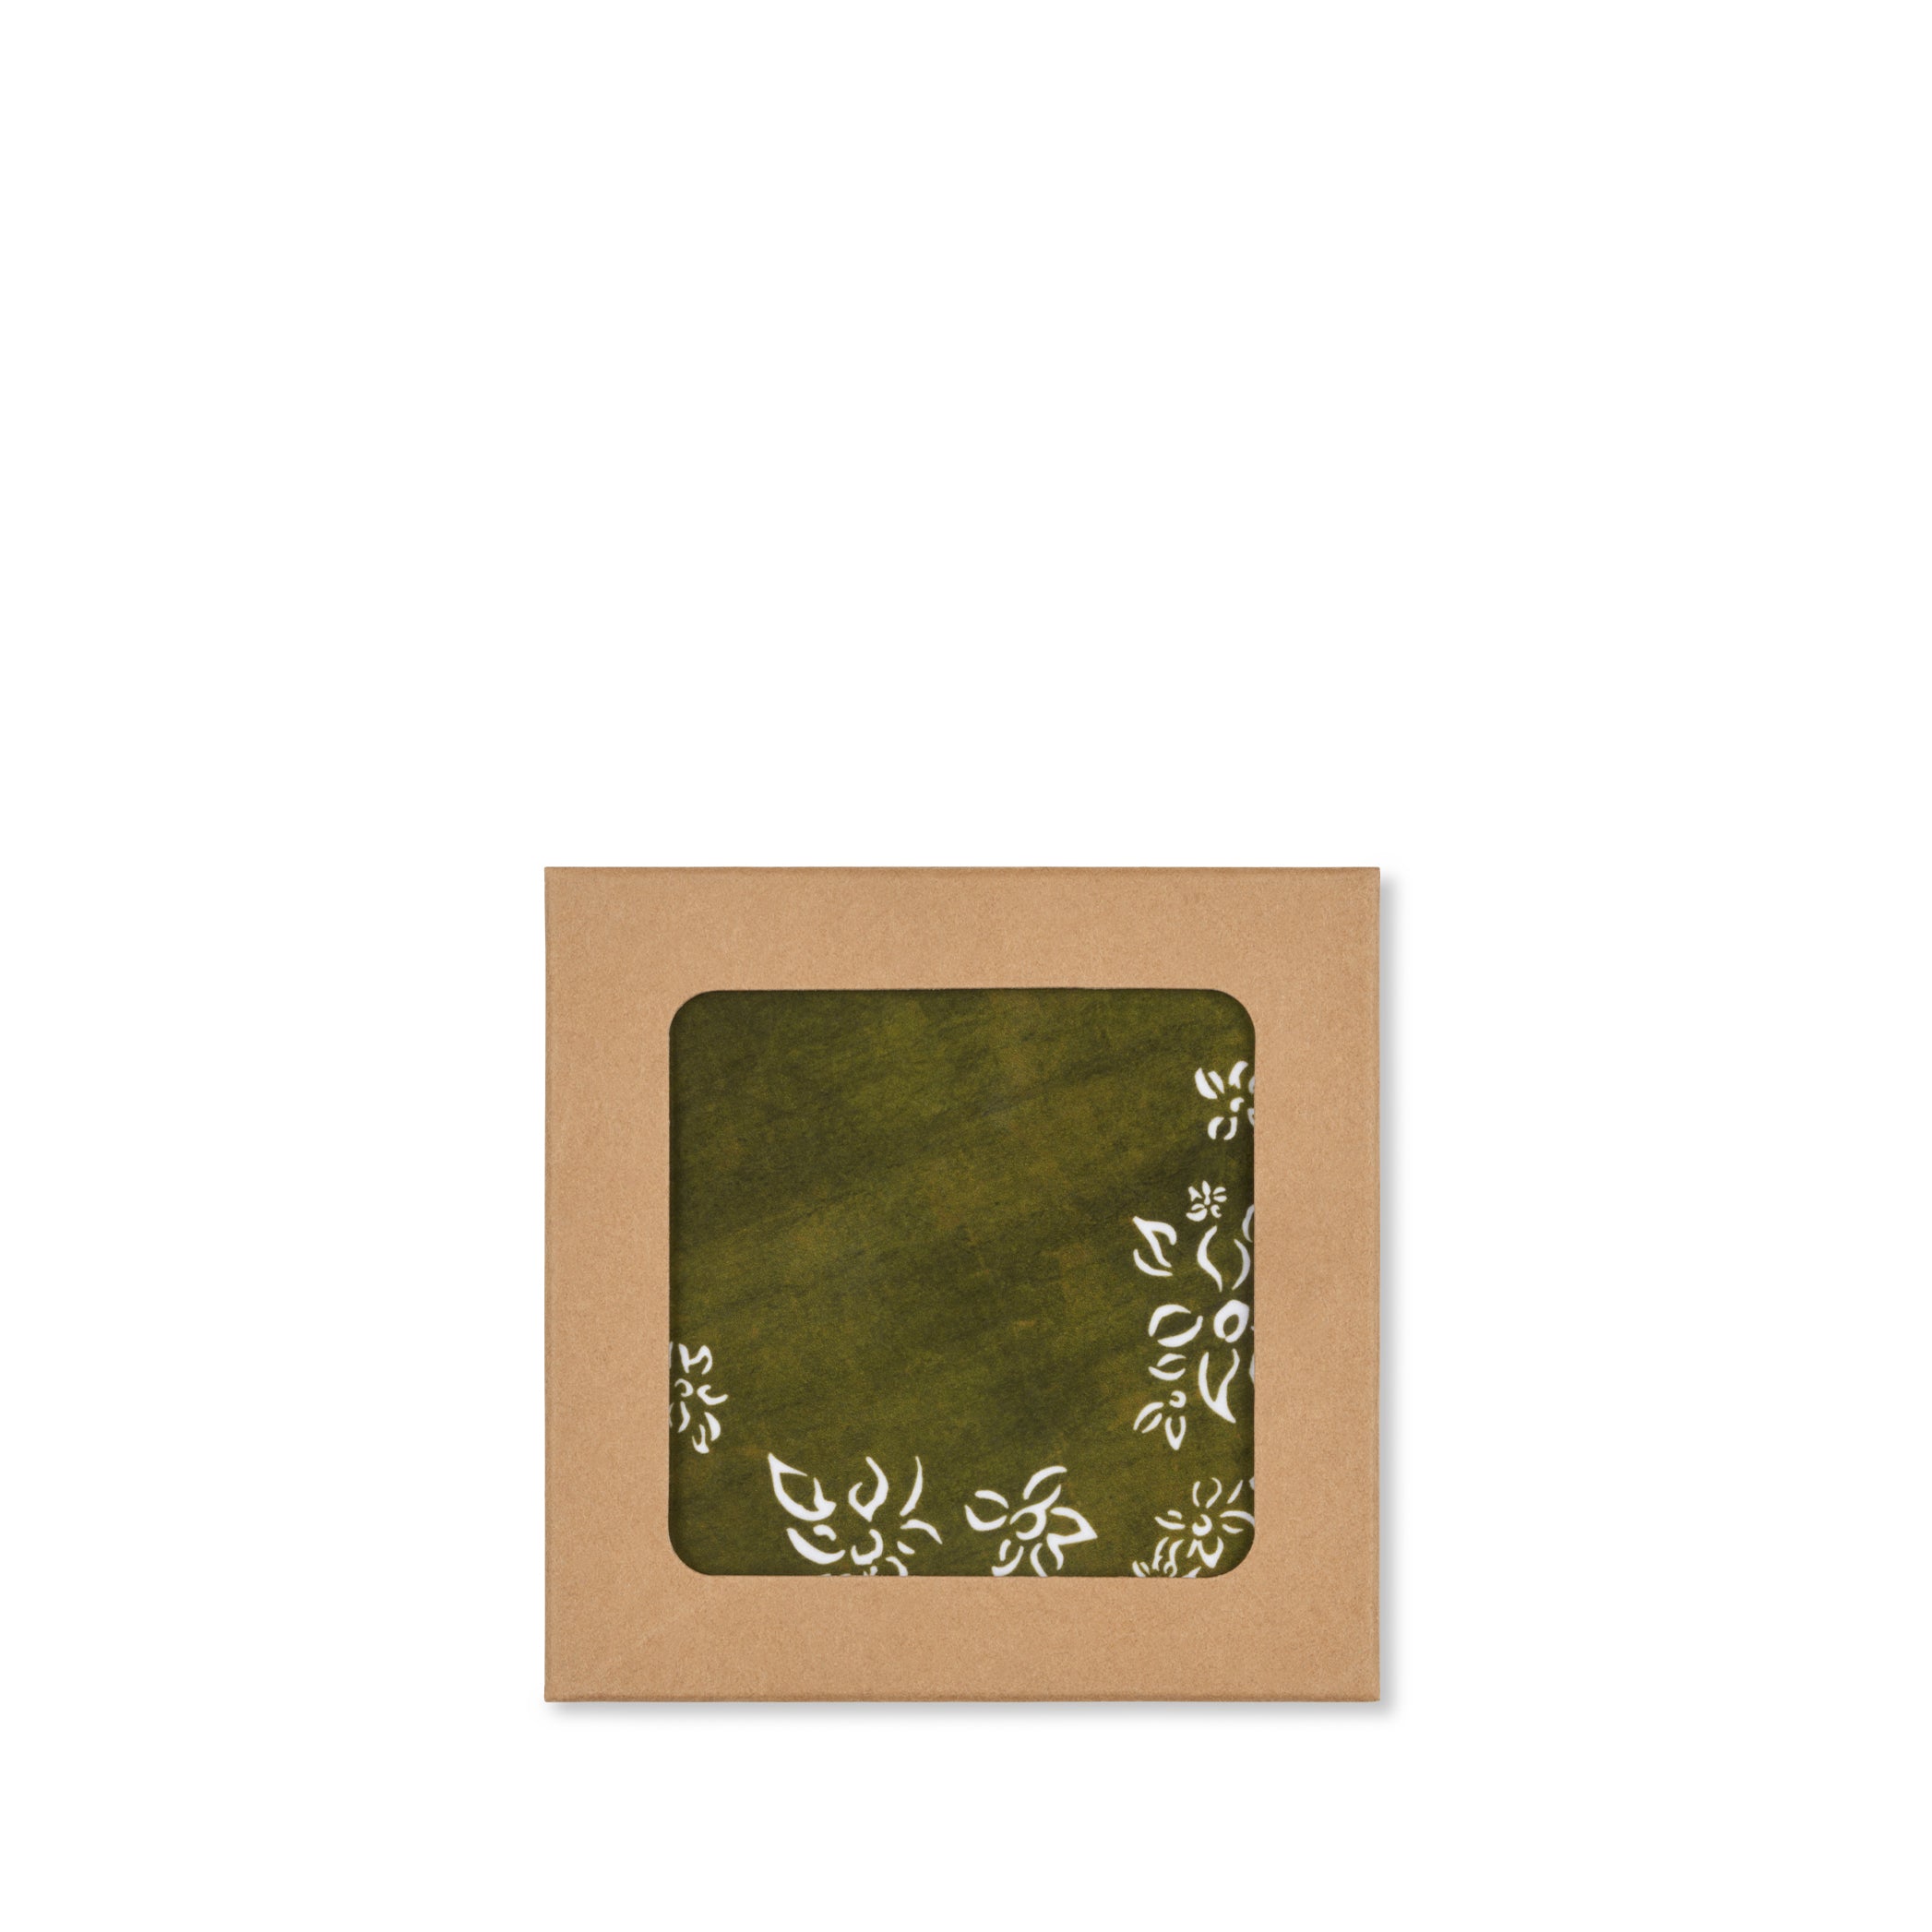 Set of Six Falling Flower Cork-Backed Coasters in Avocado Green